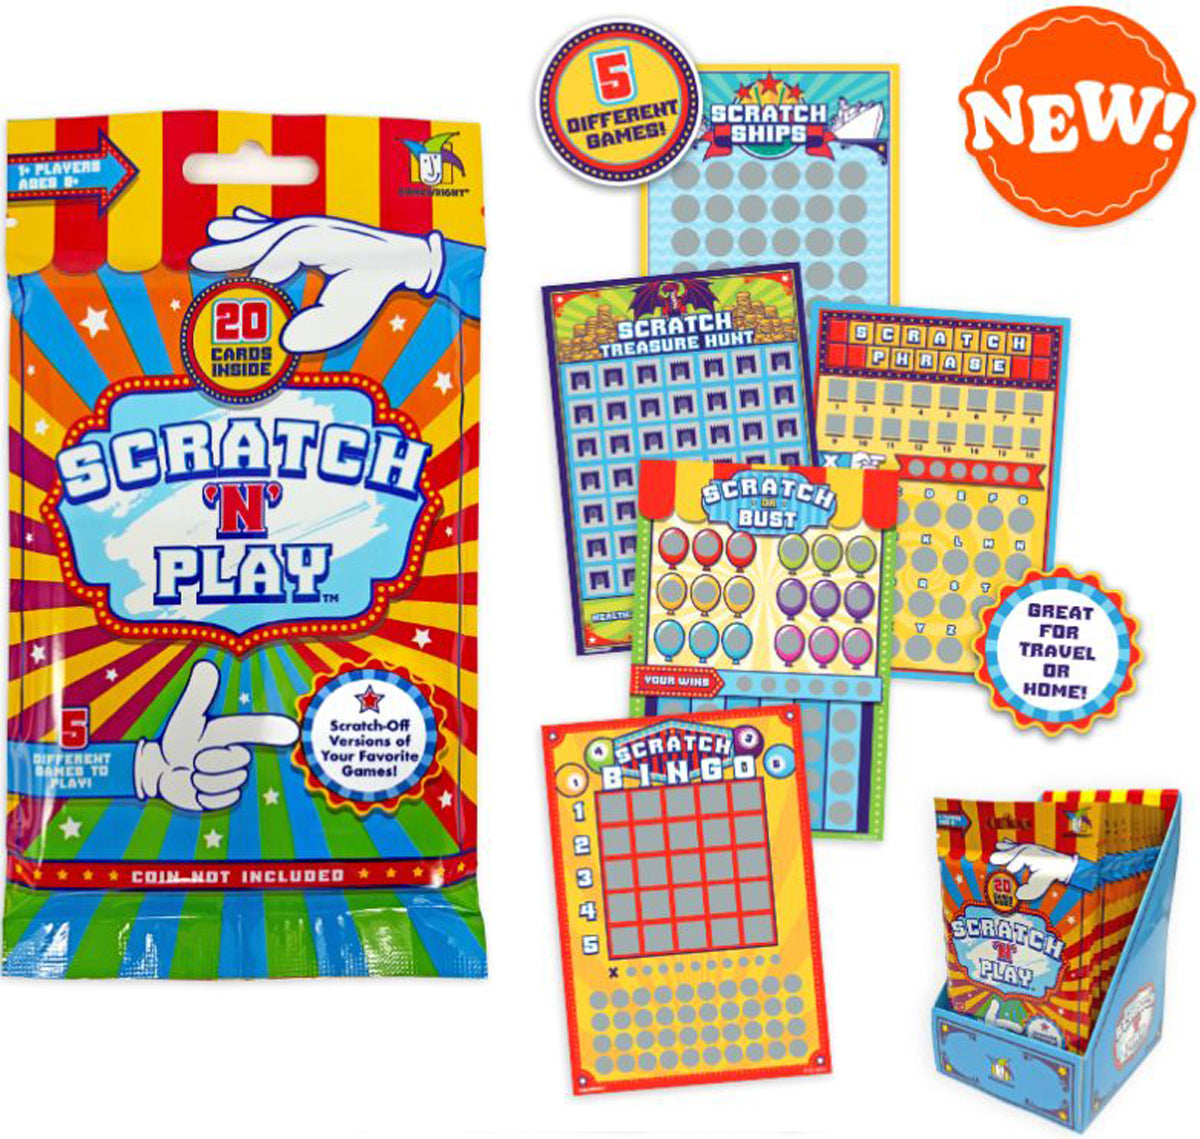 Scratch N Play- 20 Card Pack